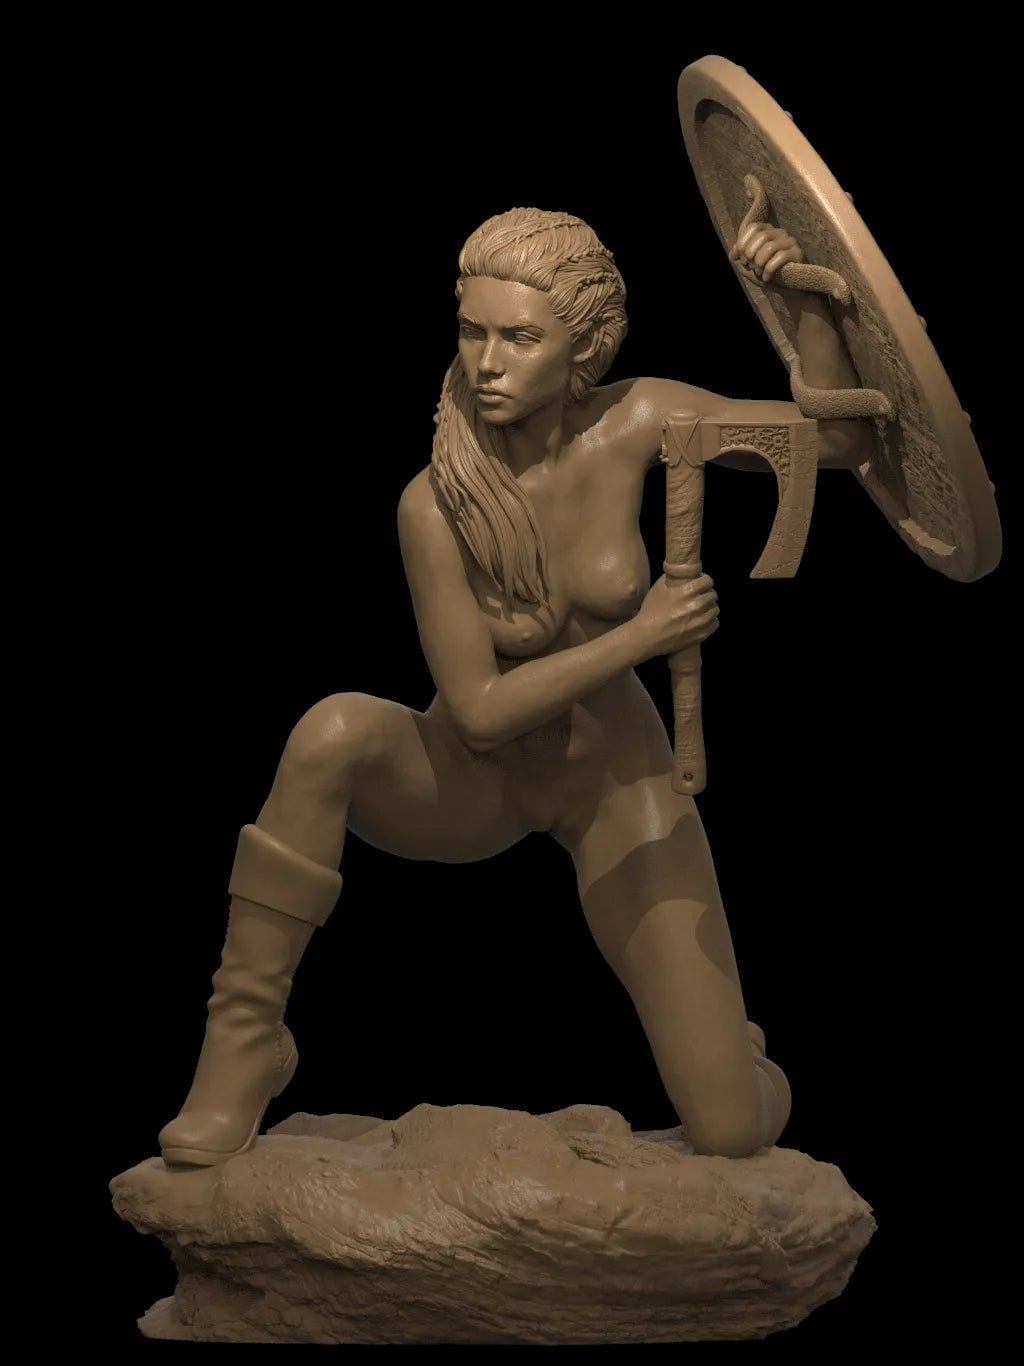 Vikings Queen Lagertha NSFW Figurine 3D Printed Fanart by ca_3d_art